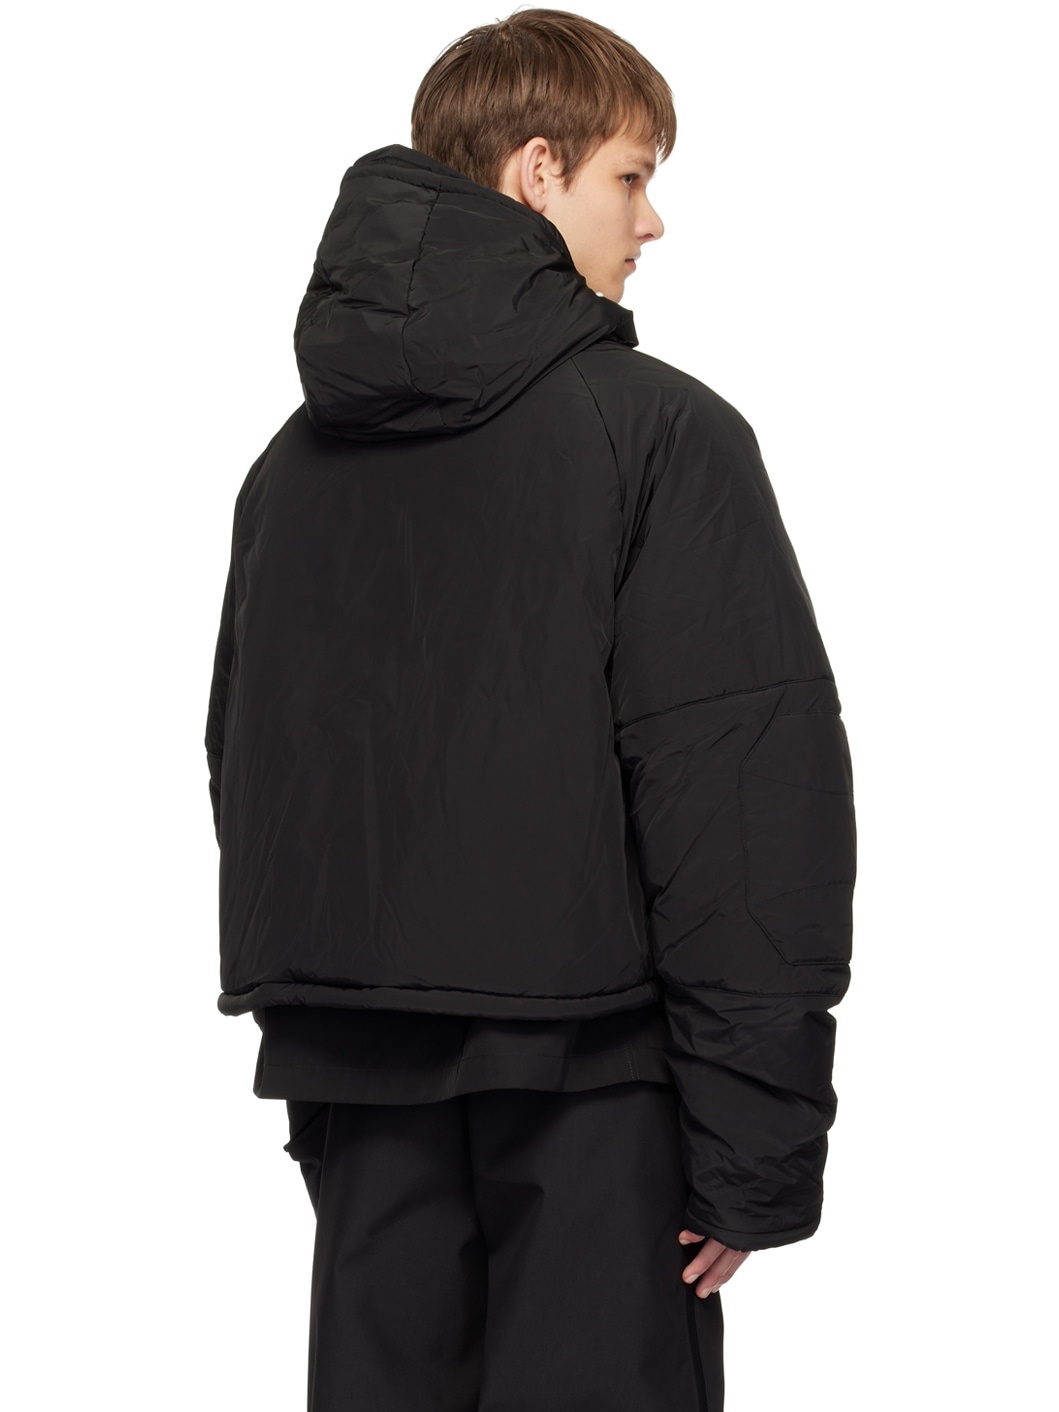 SSENSE Exclusive Black Puffer Jacket - 3